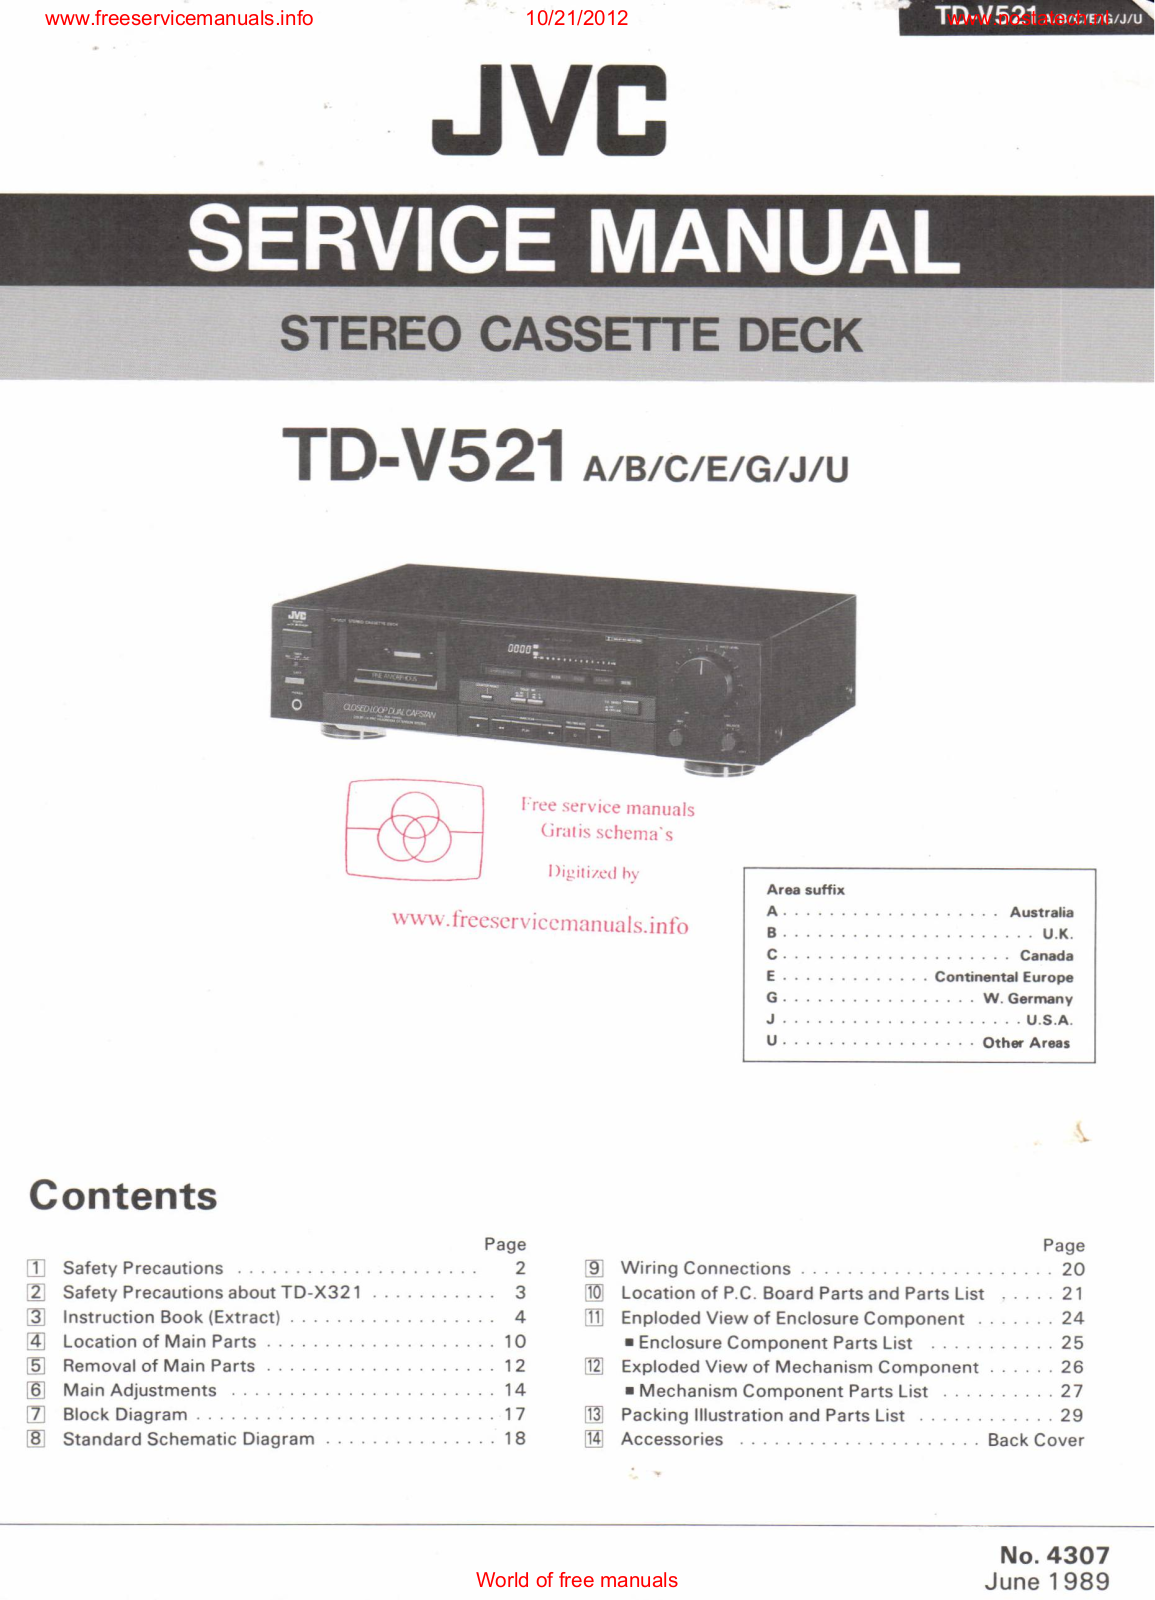 JVC td-v521 Service Manual